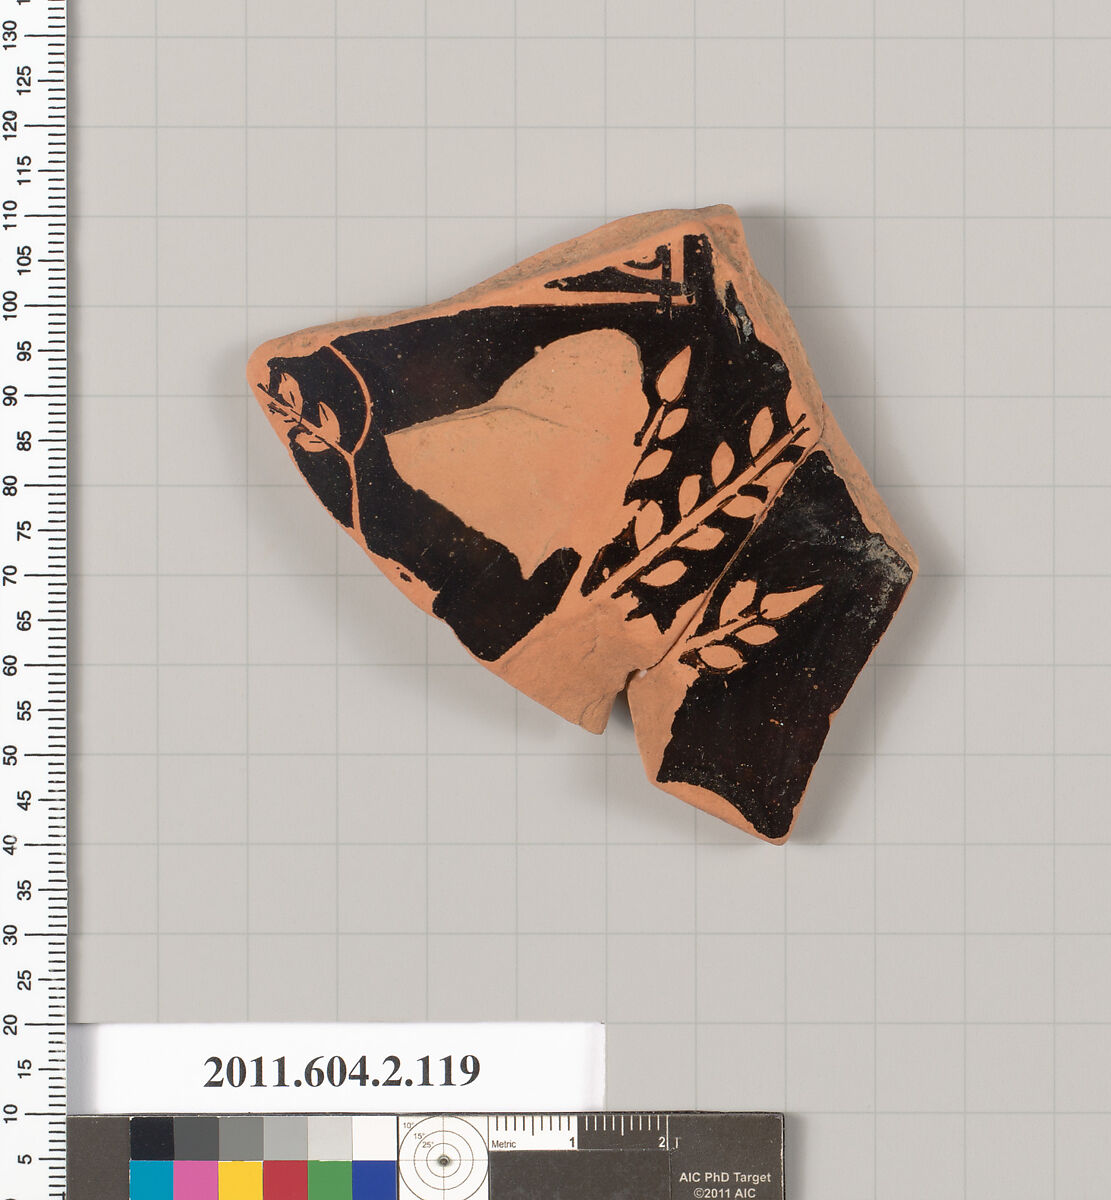 Terracotta fragment of a pelike (jar), Terracotta, Greek, Attic 